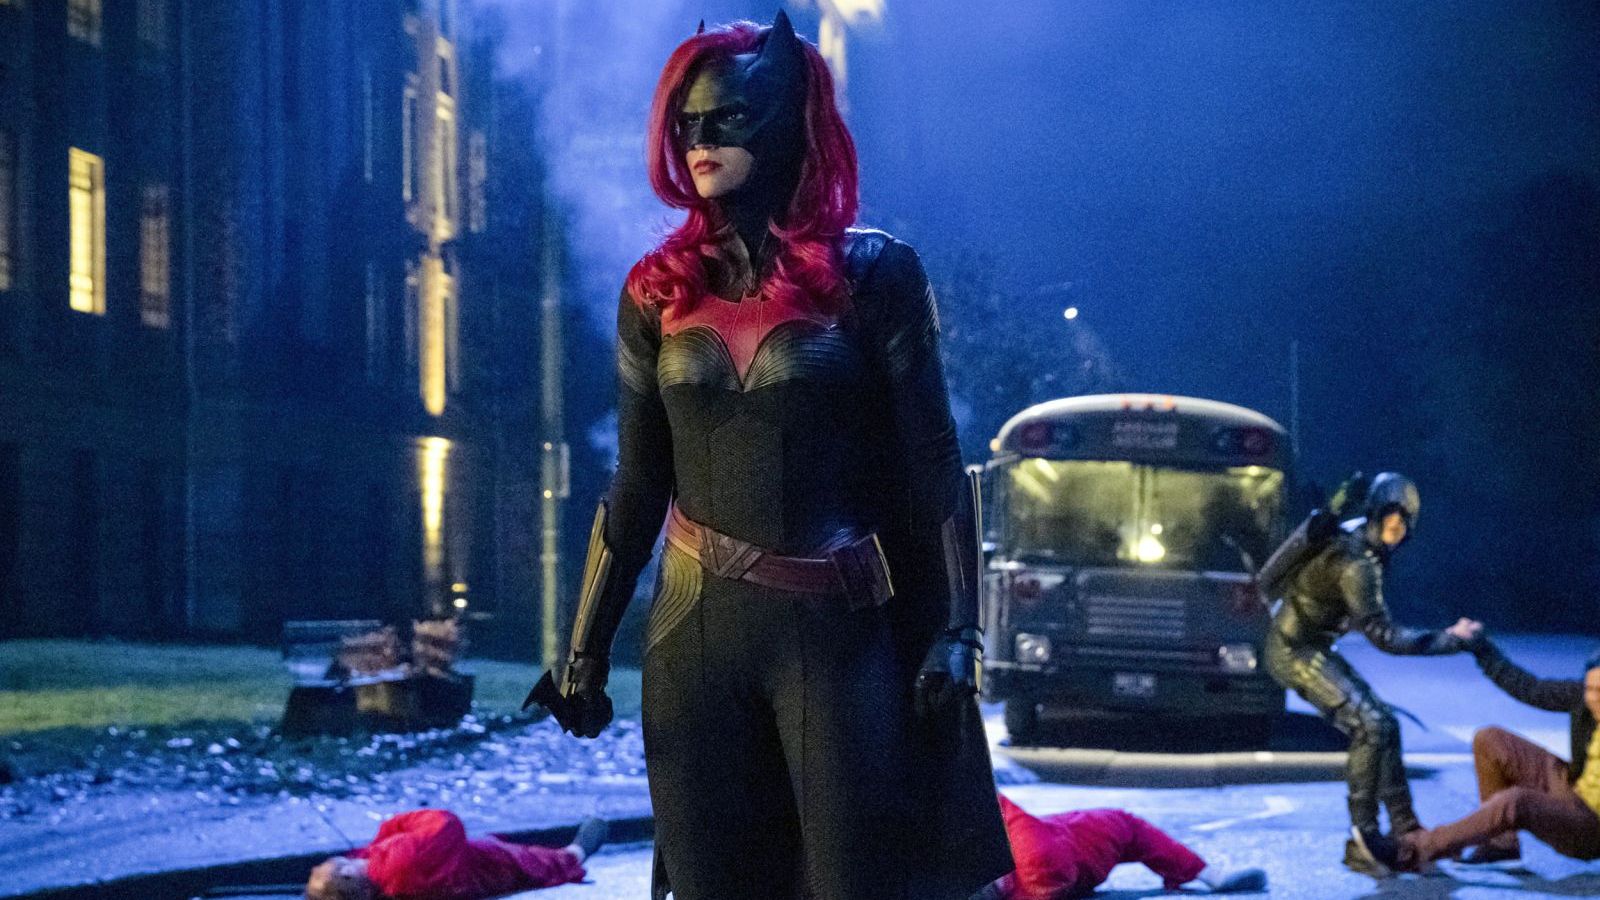 How to Watch 'Batwoman' Online - Live Stream Season 1 Episodes